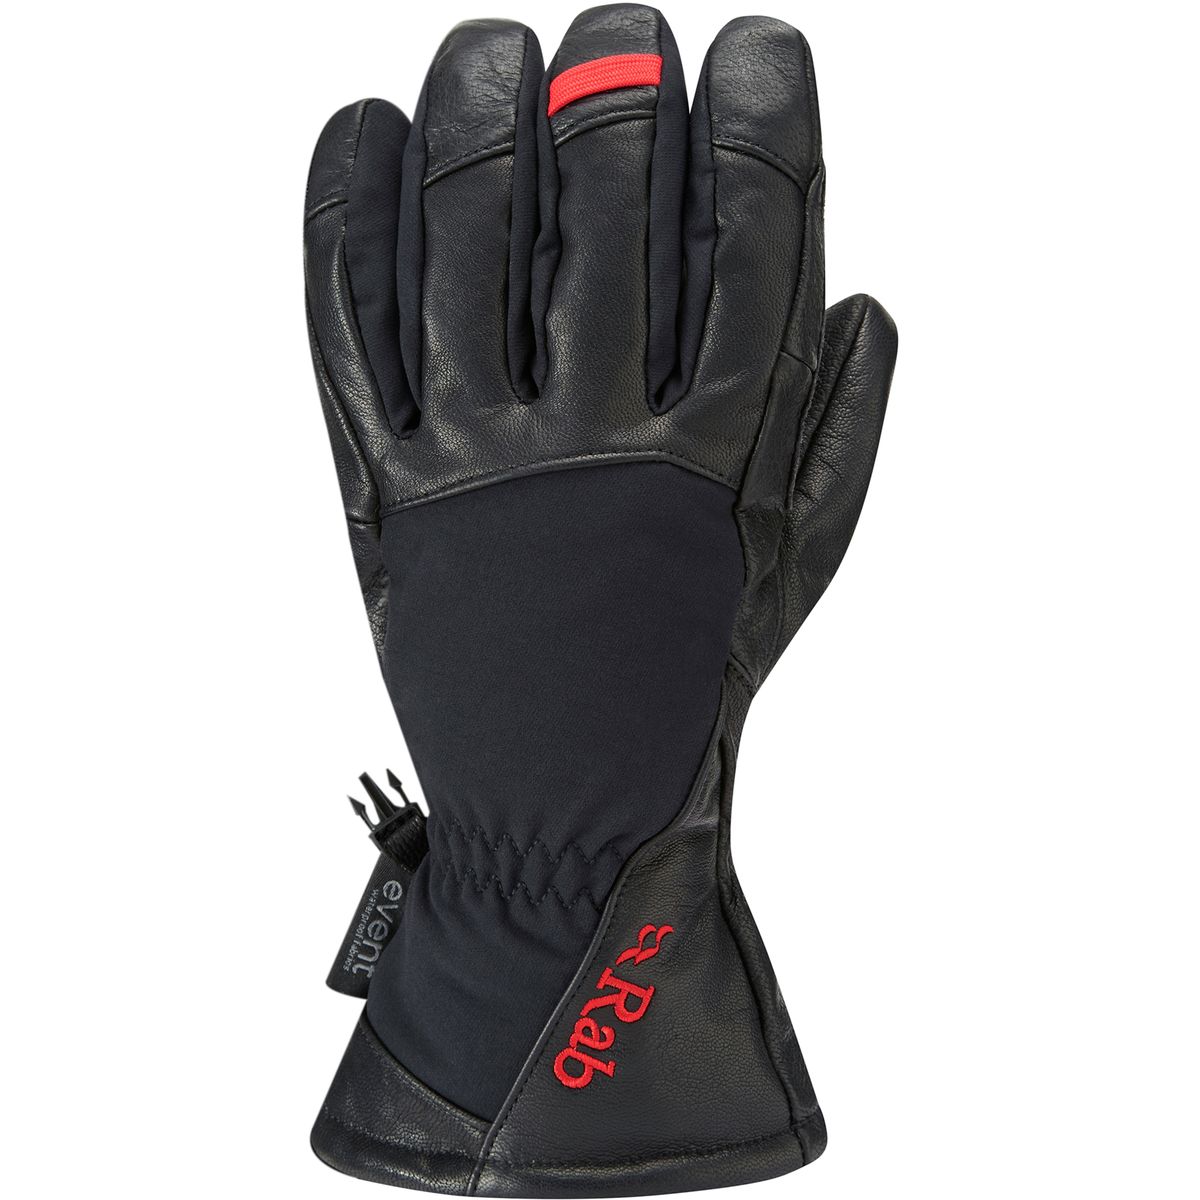 Rab Guide Glove Black, L